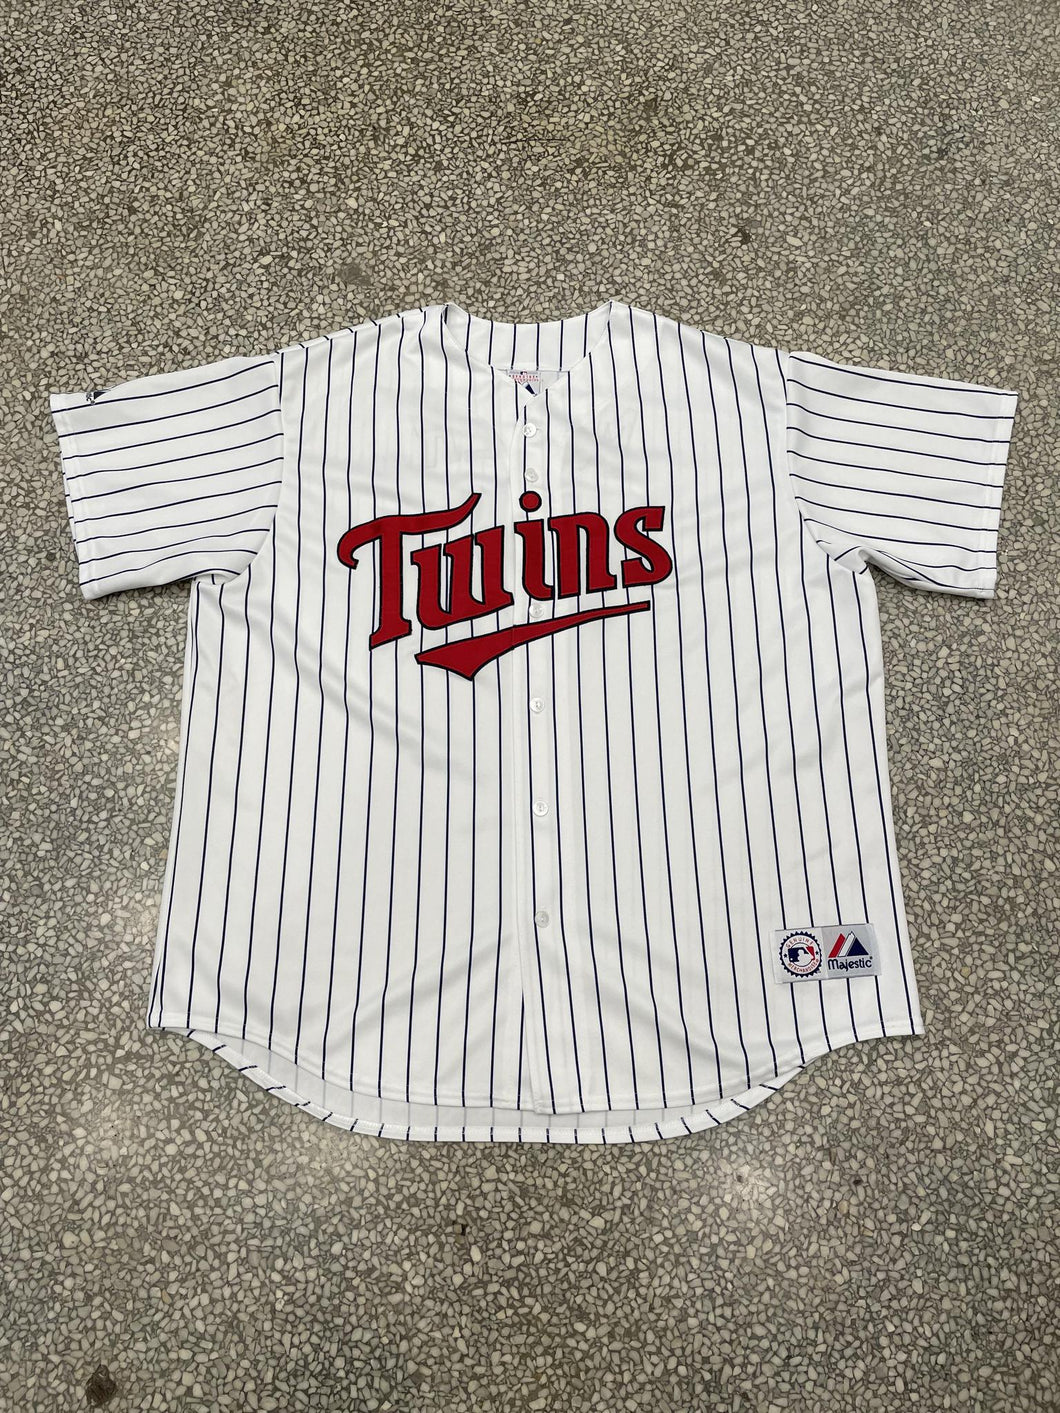 Minnesota Twins Majestic Baseball Shirt #7 “Joe Mauer” for Sale in